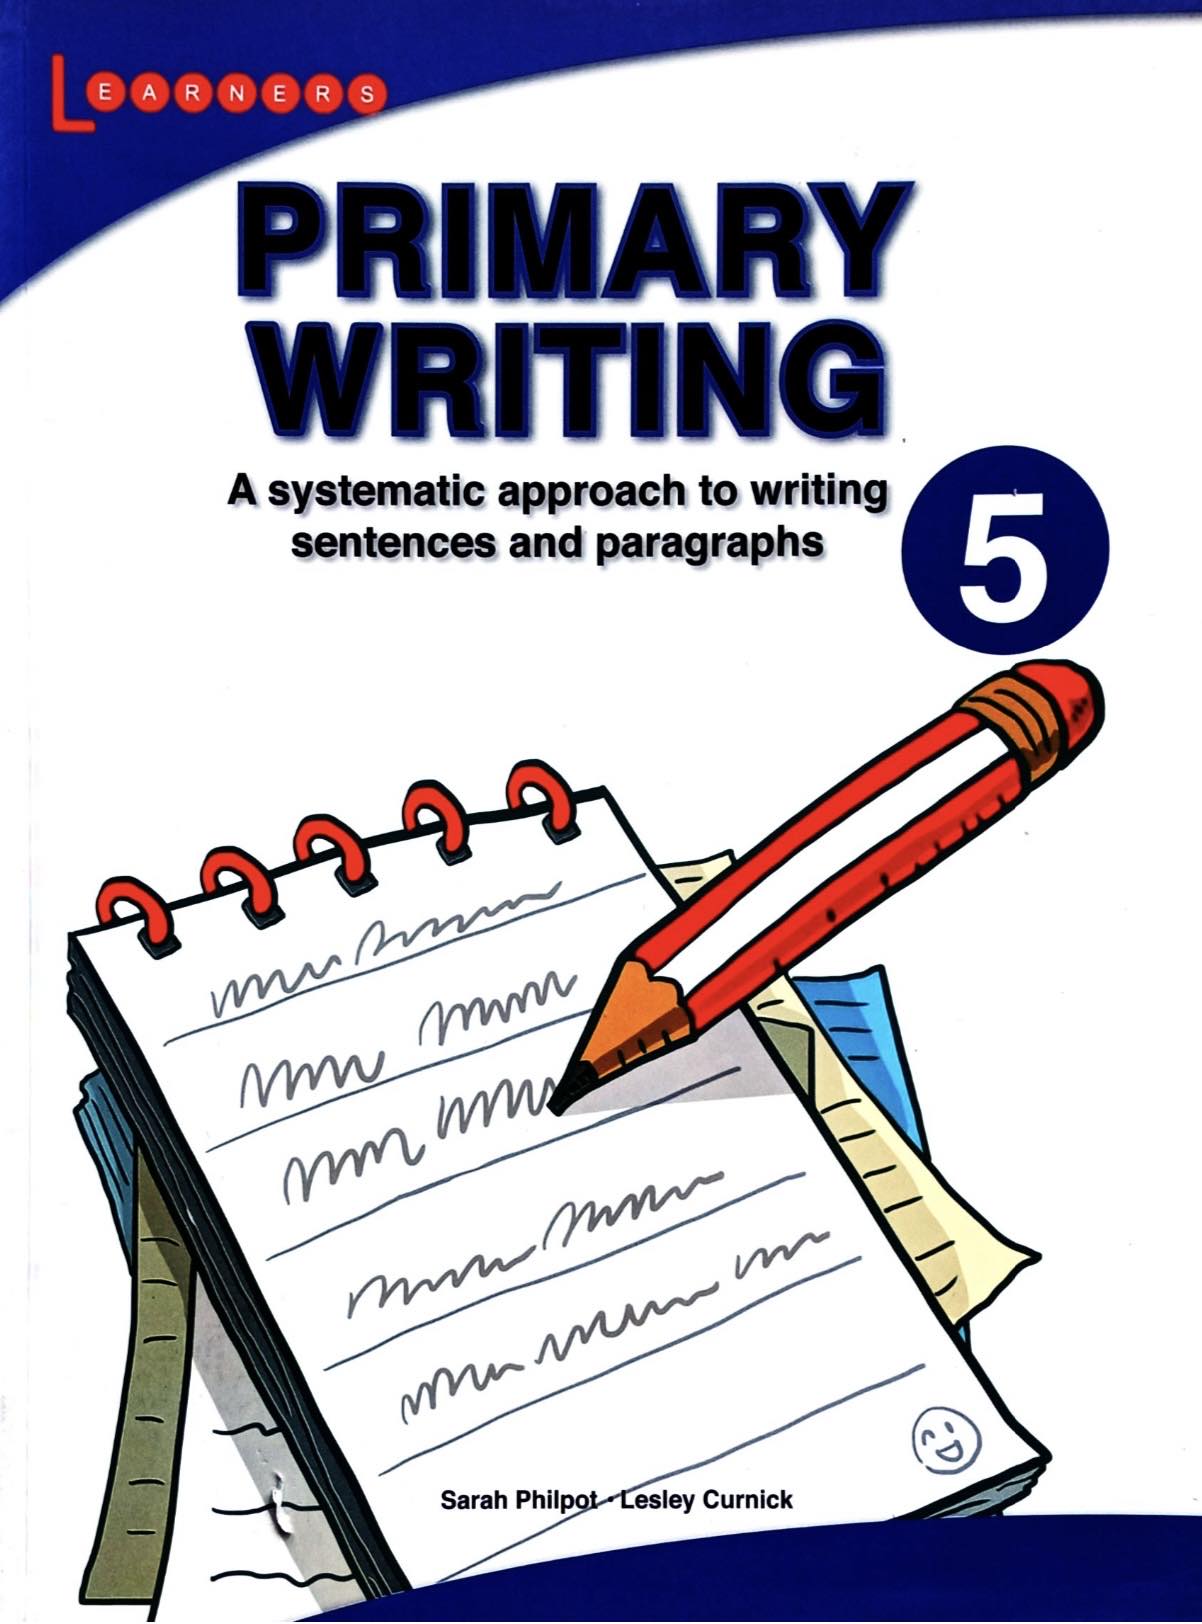 Scholastic Primary Writing Workbooks 1 to 6